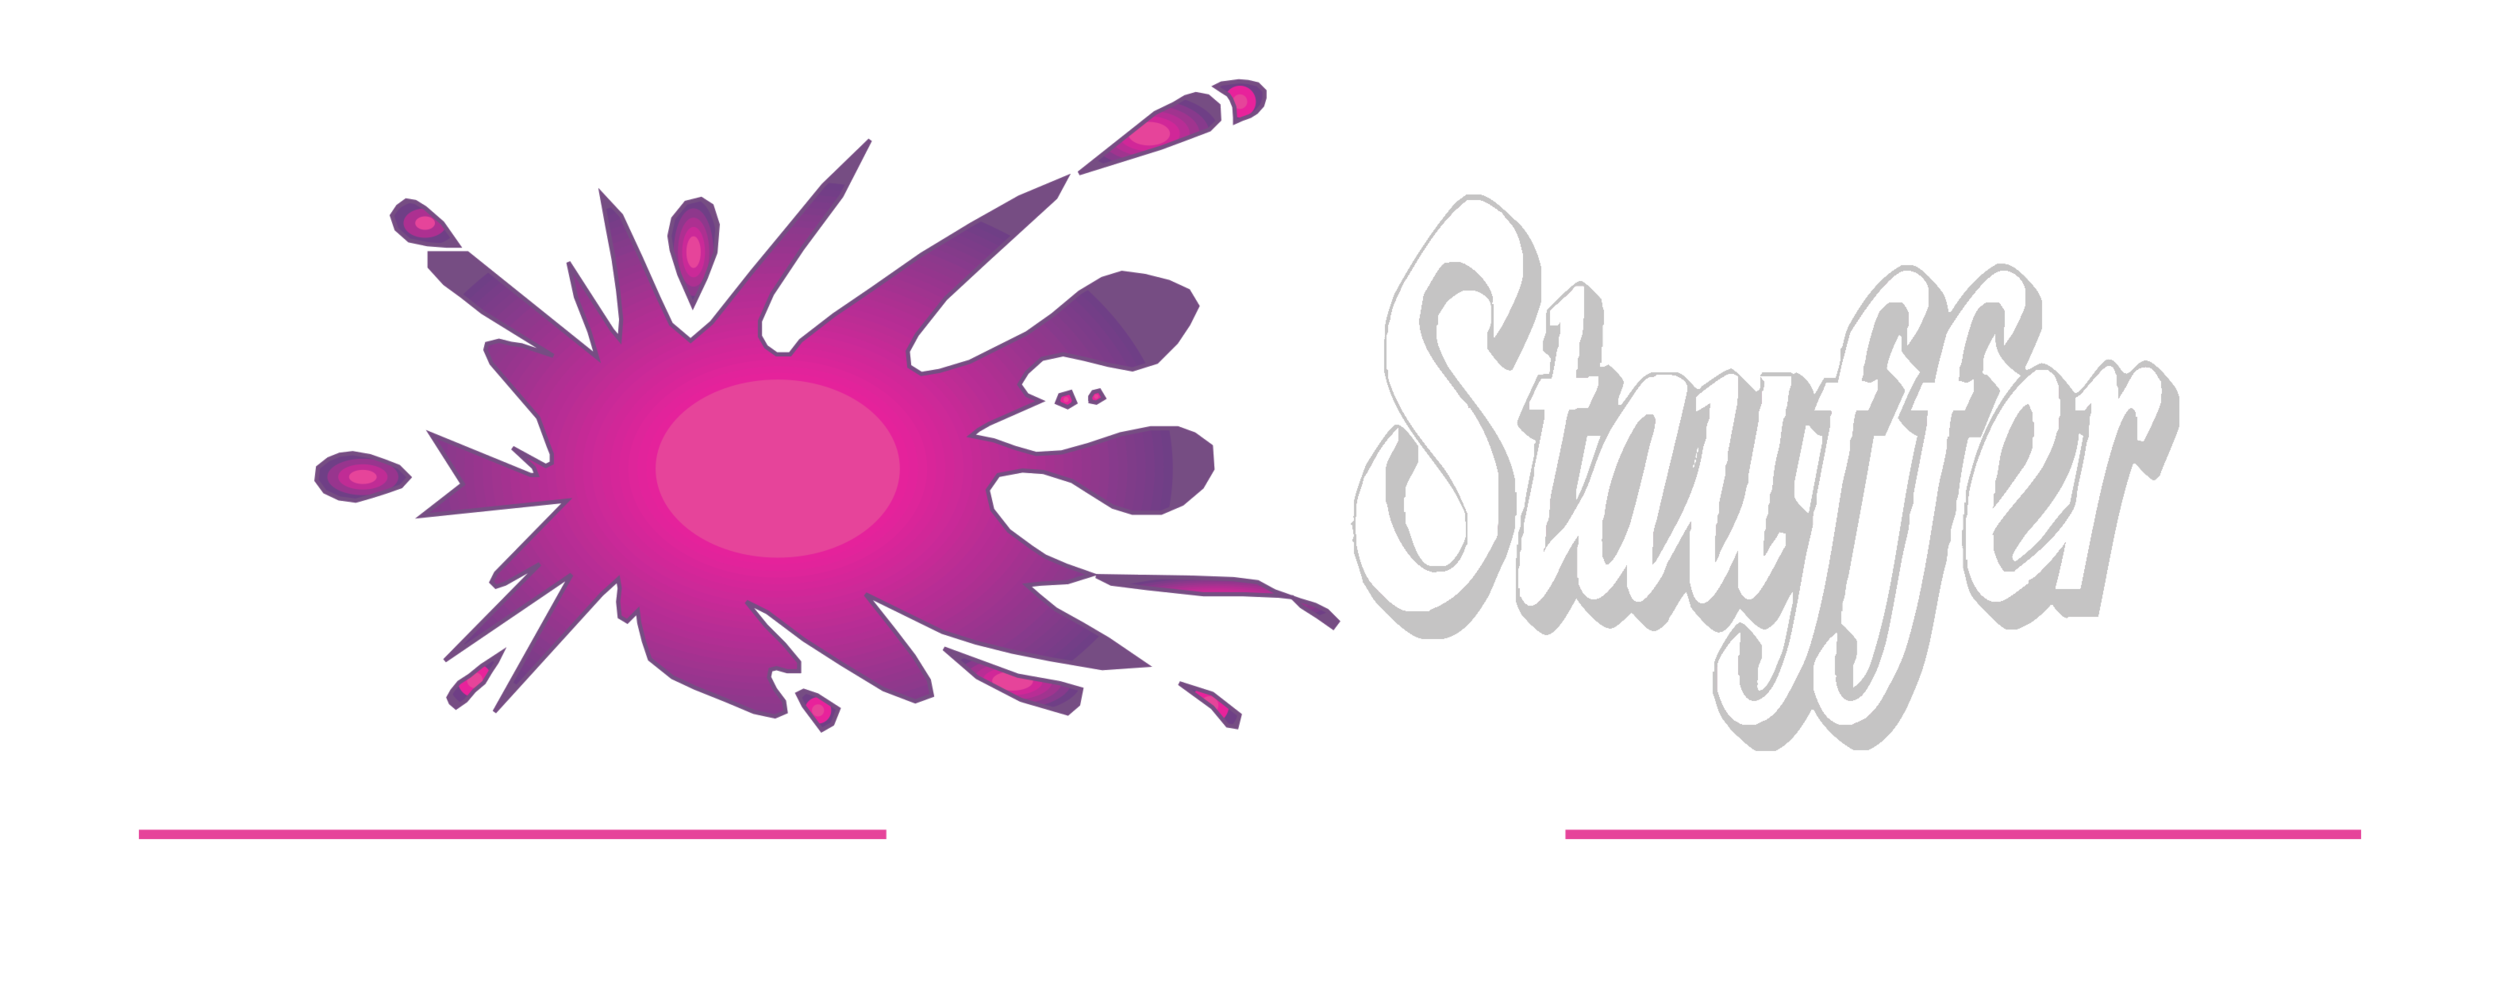 Stauffer Enterprises